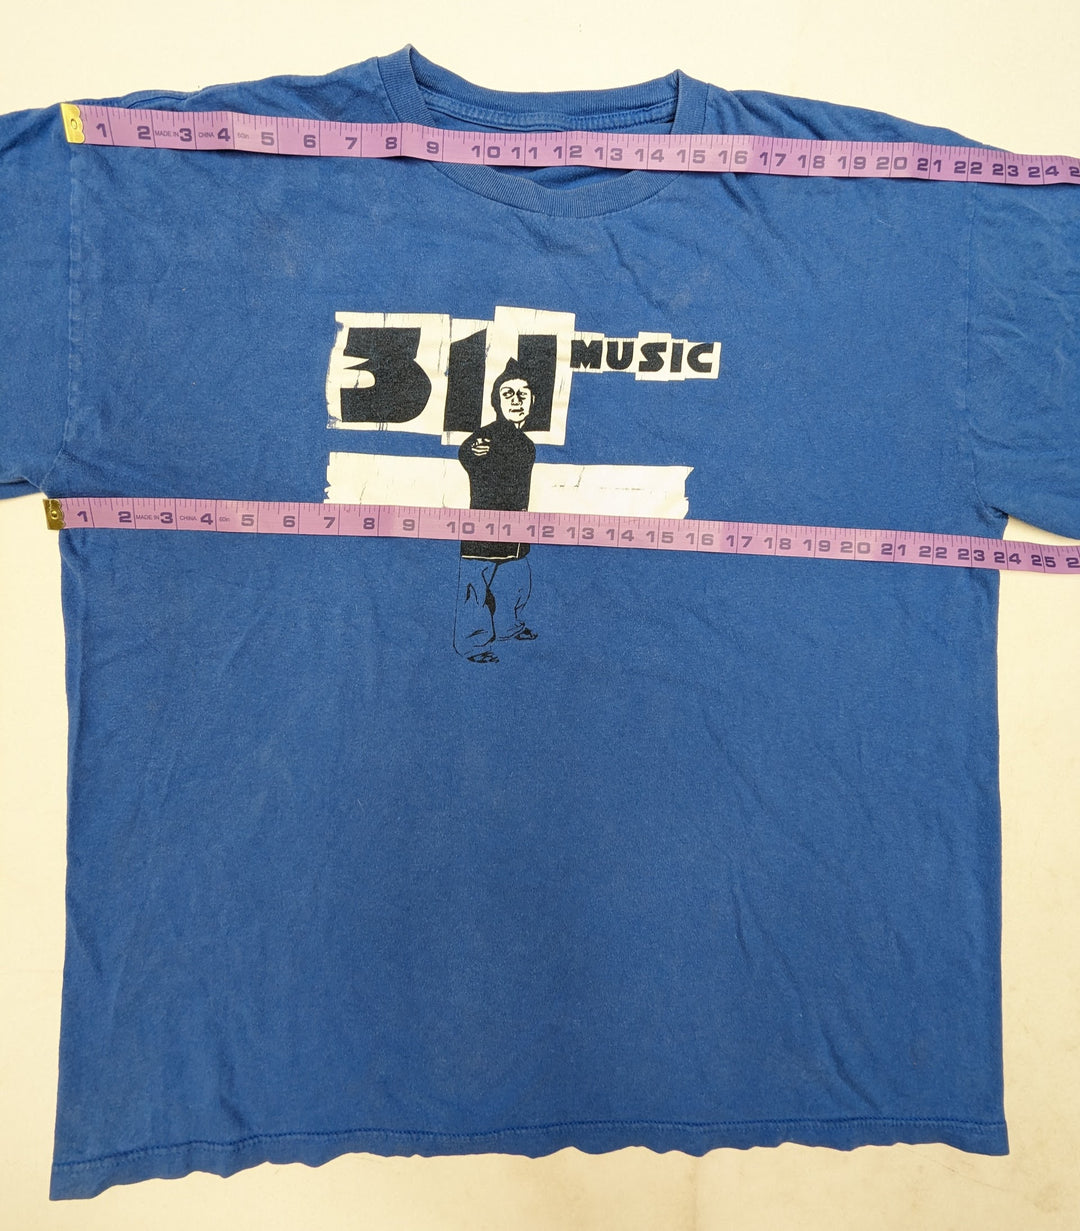 x311 Music T-Shirt 1 pc 1 lb C0123216 - Raghouse